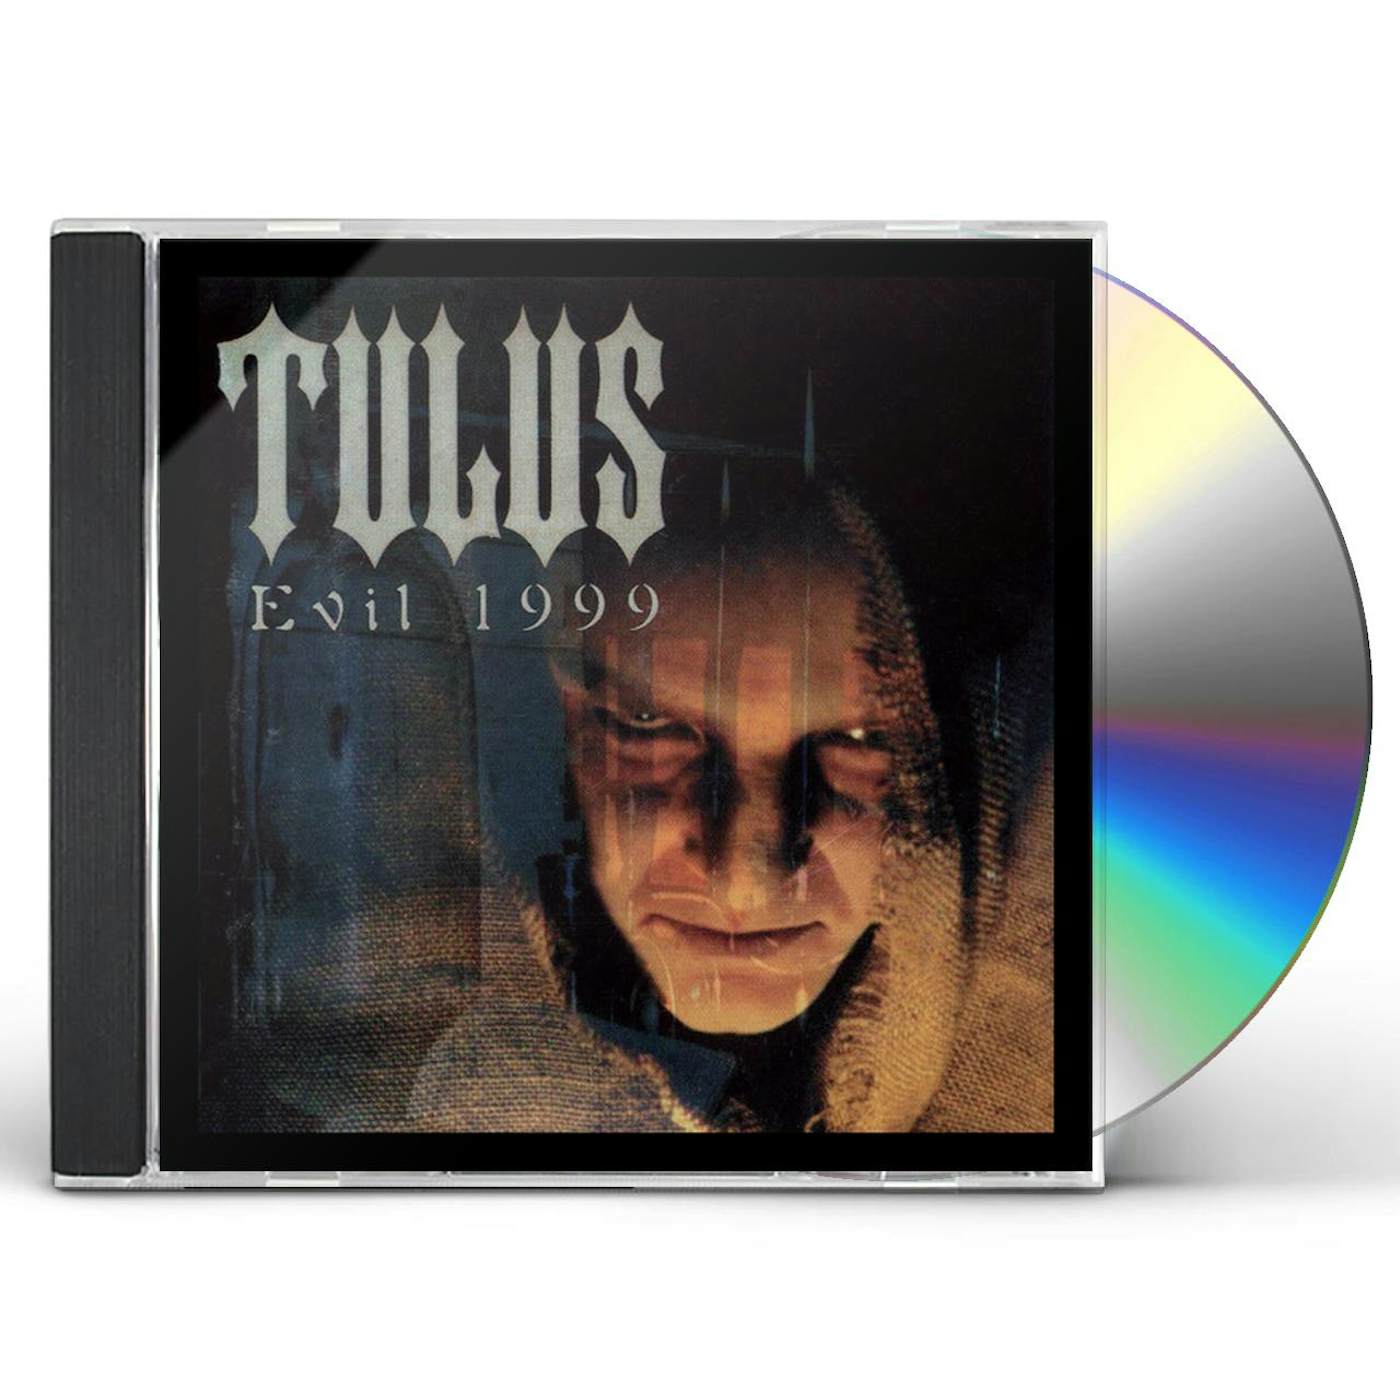 Tulus EVIL 1999 CD